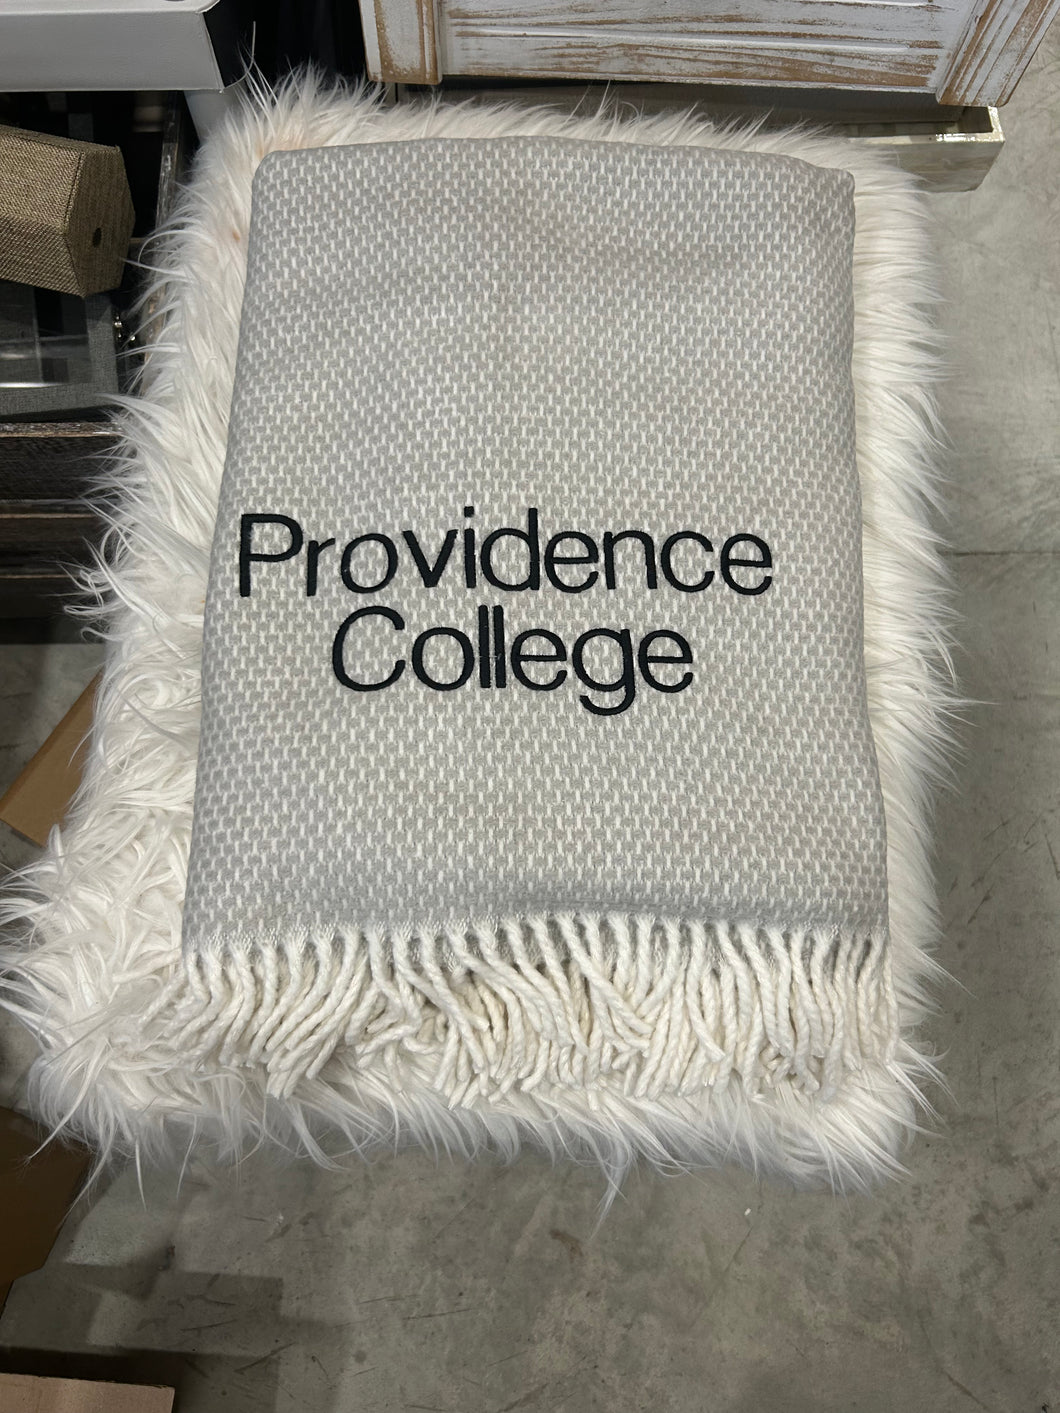 Providence College blanket